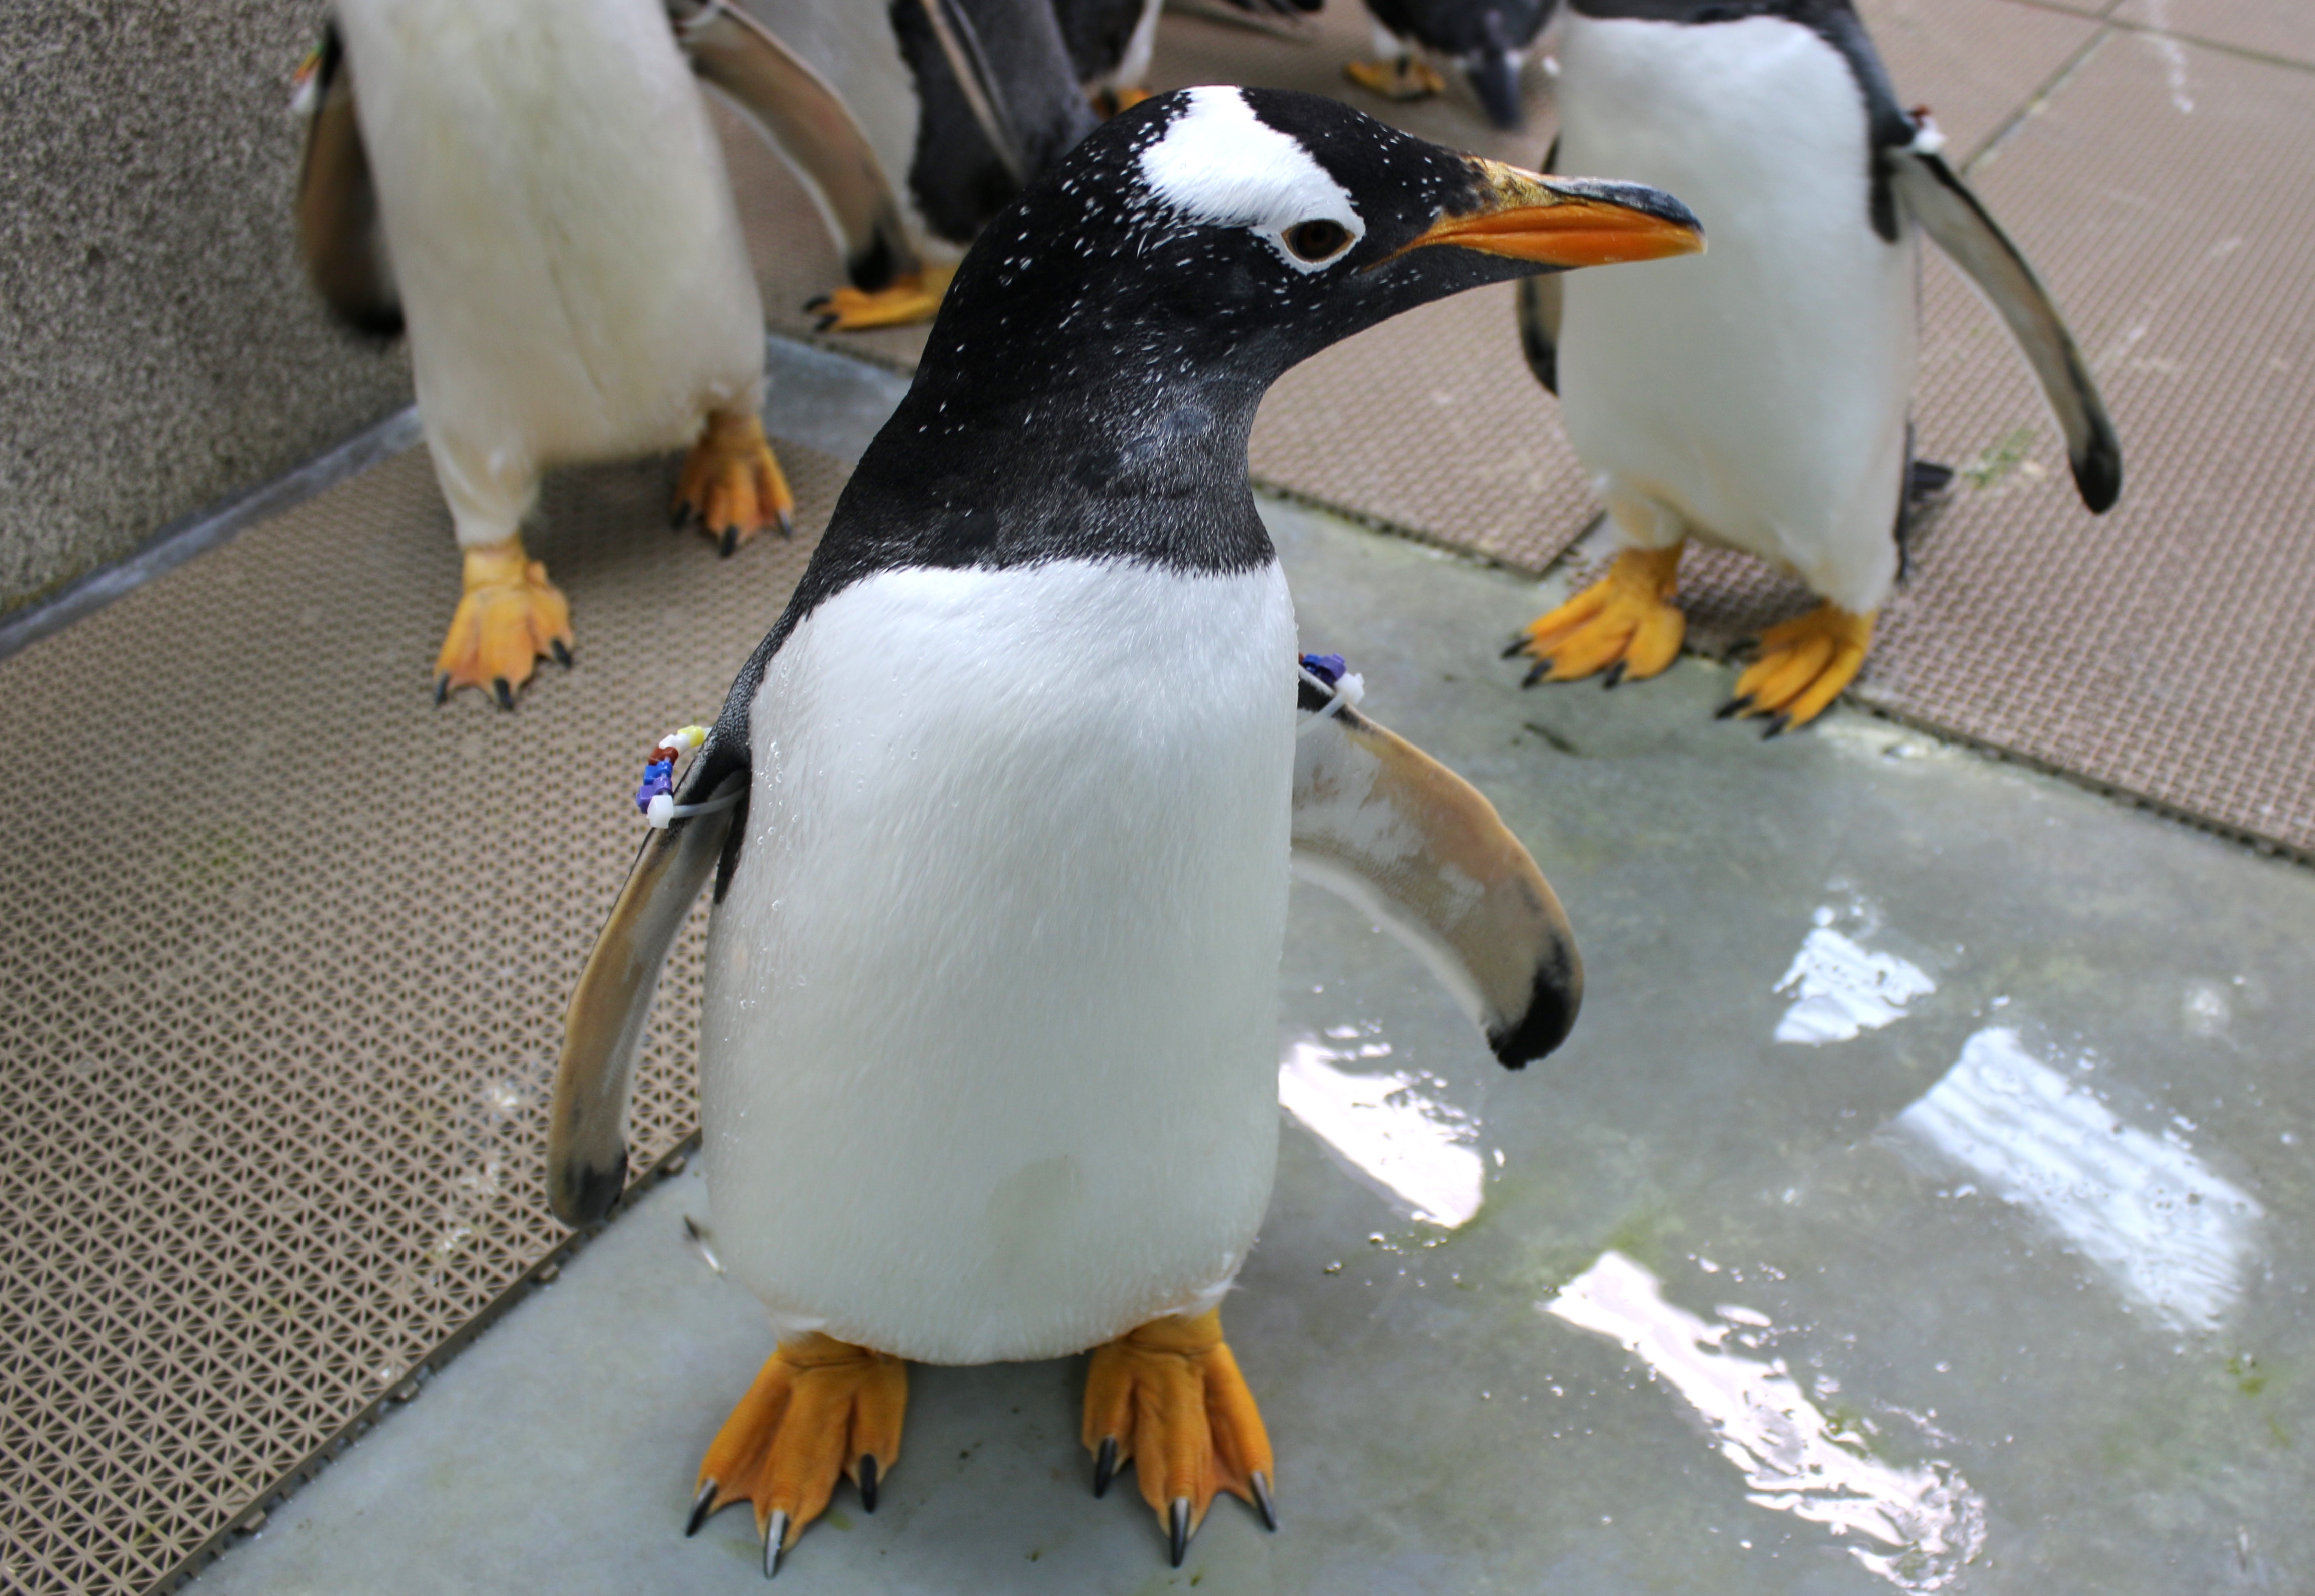 Gentoo penguins arrive at the Detroit Zoo. (credit: Detroit Zoo)